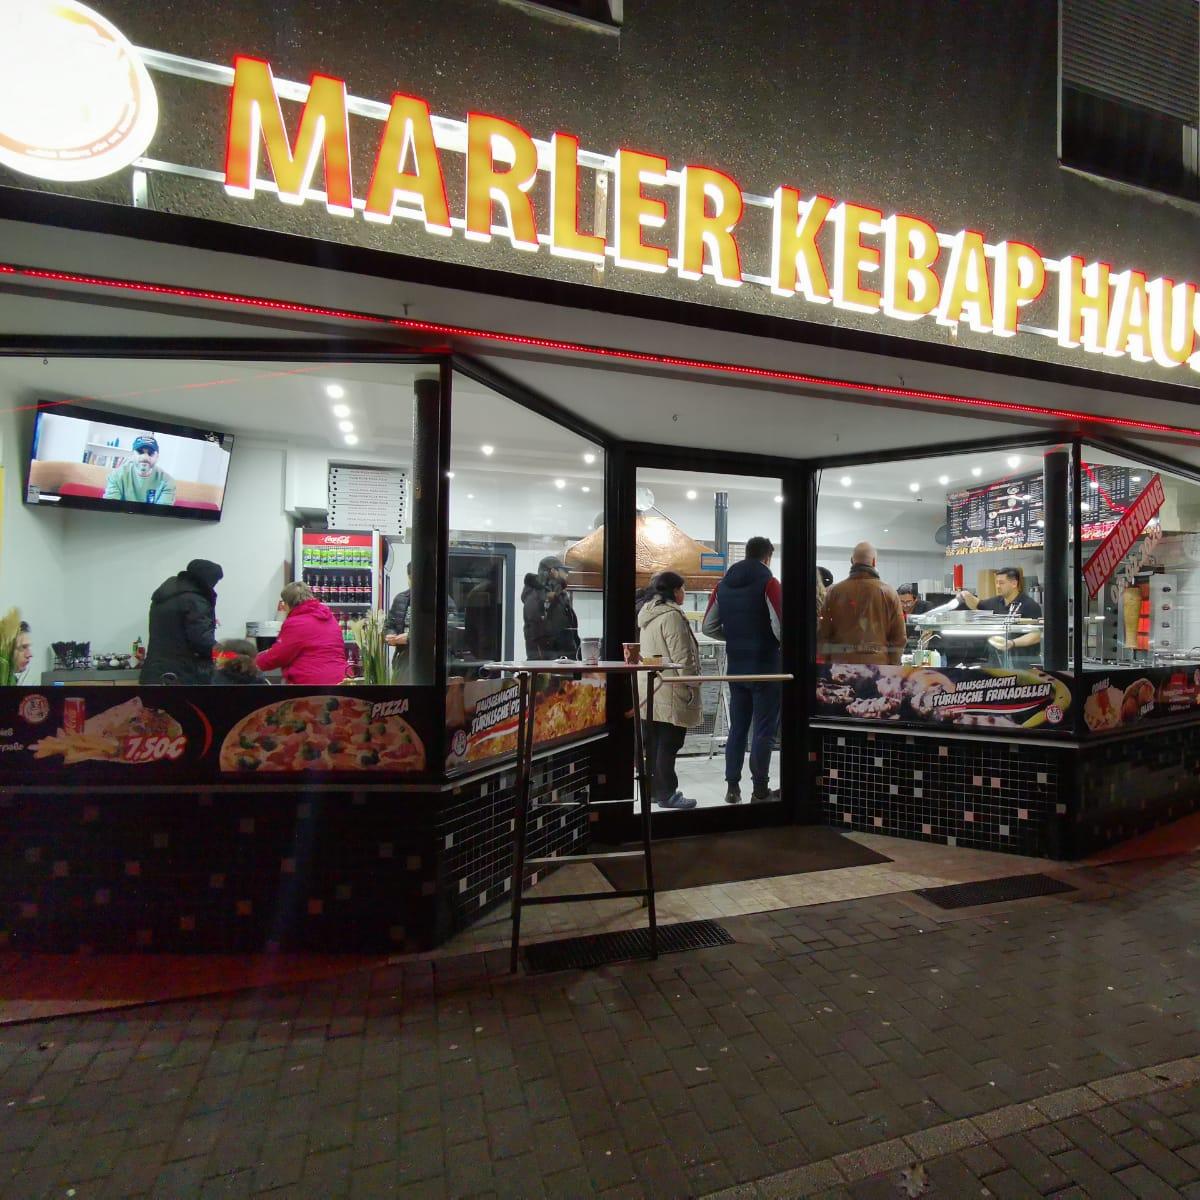 Restaurant "Marler Kebap Haus" in Marl